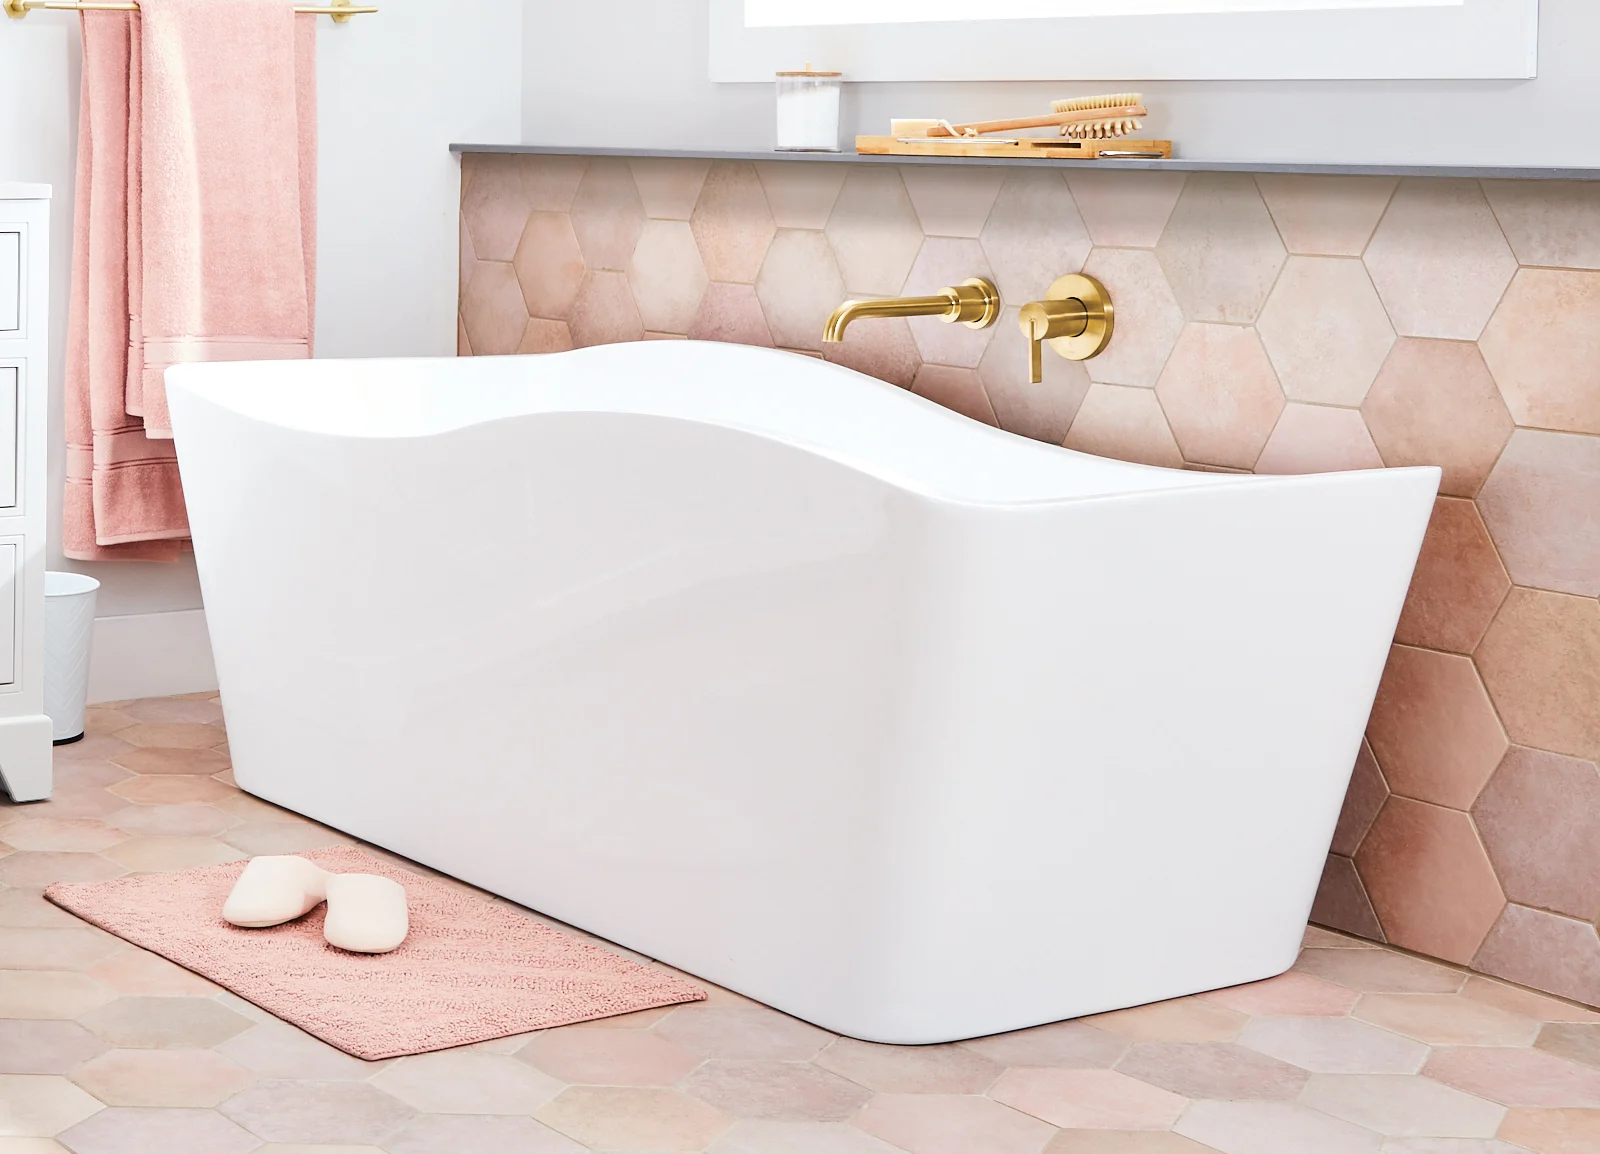 A floor-mounted freestanding bathtub